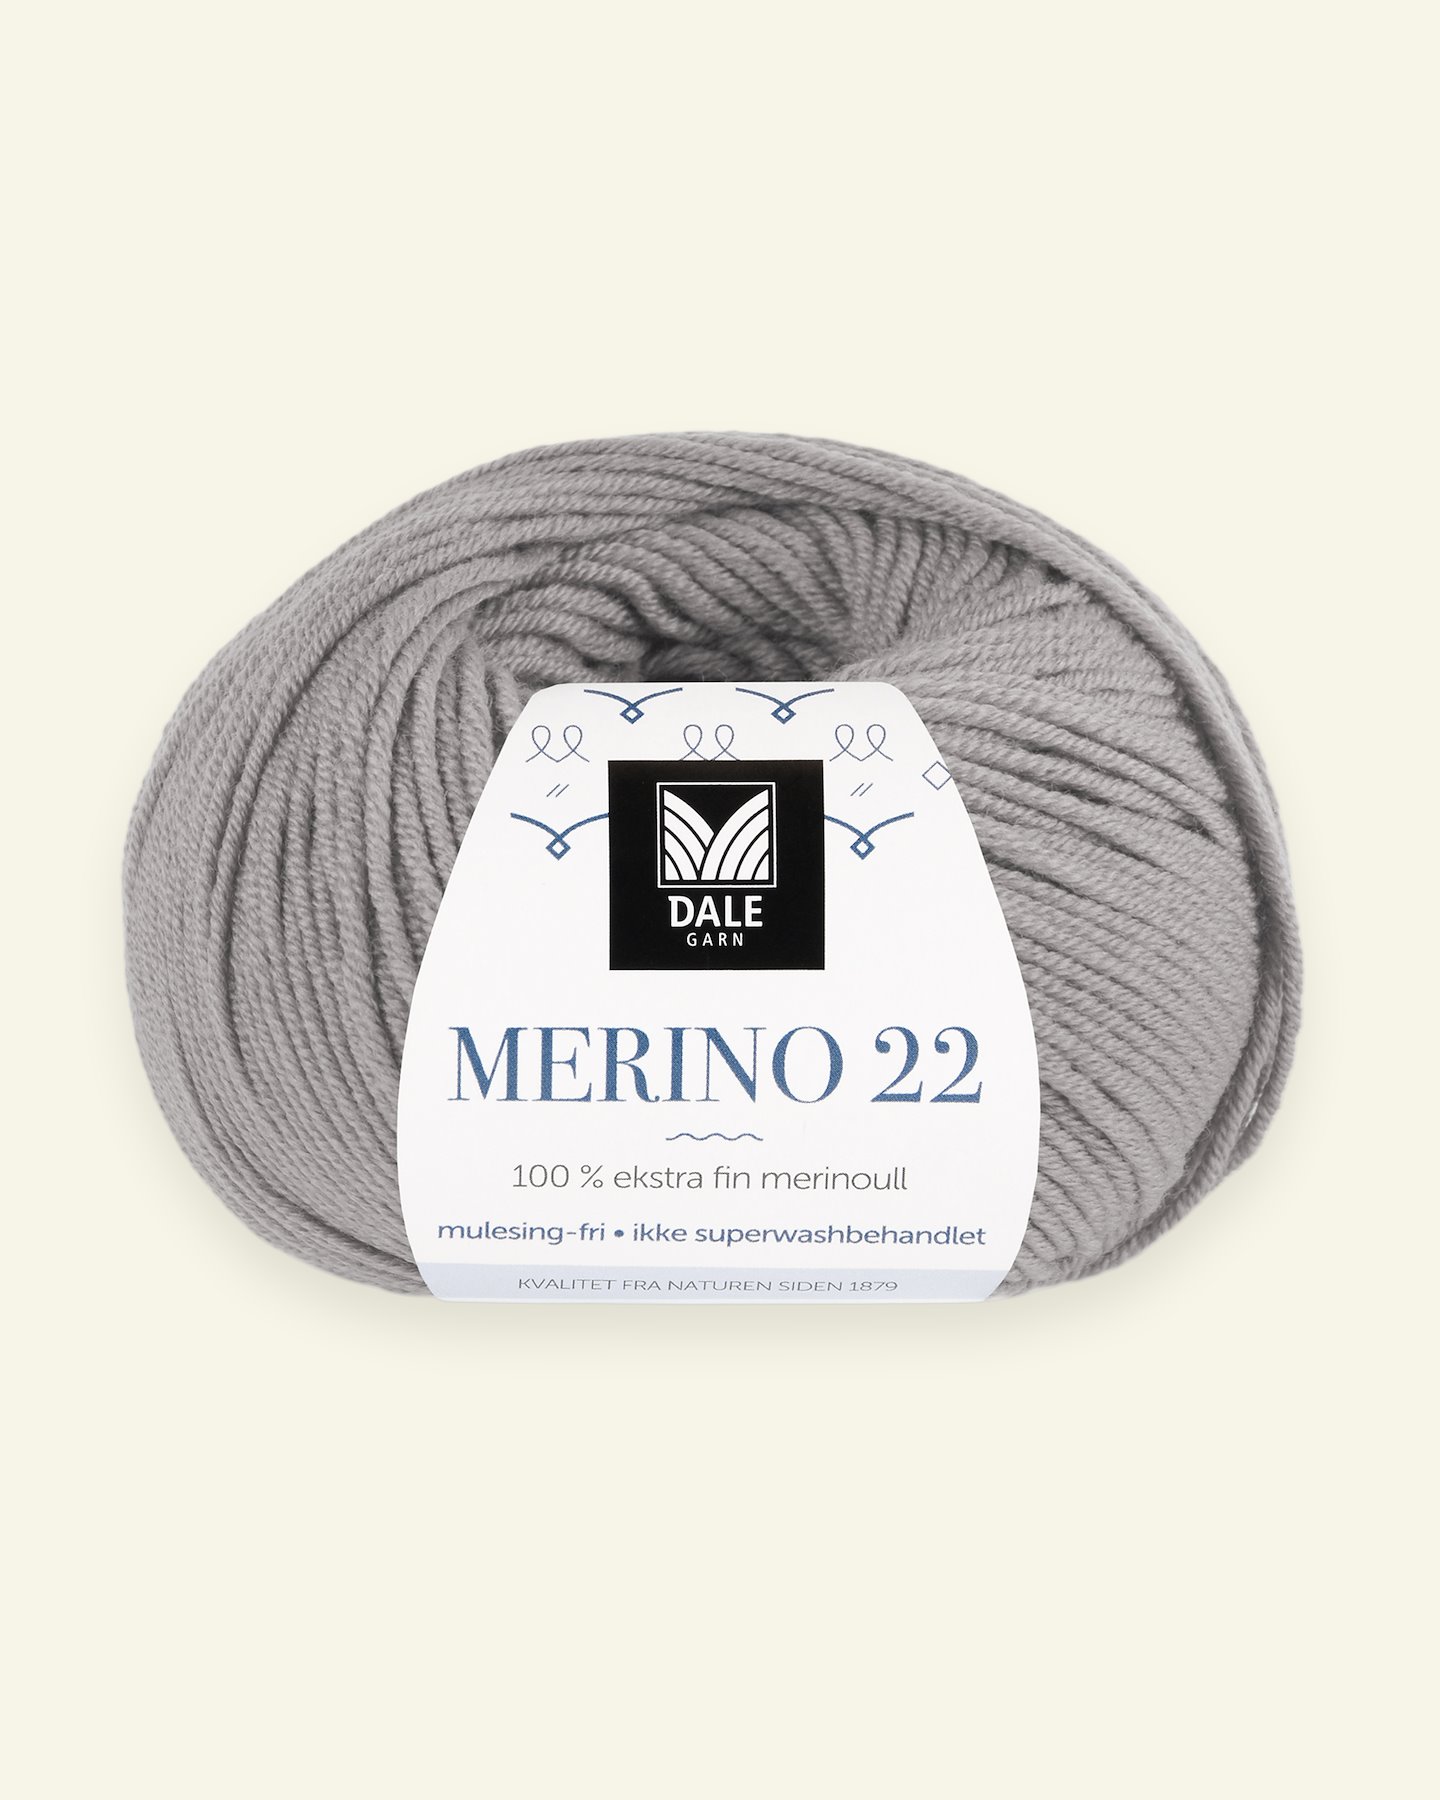 Dale Garn, 100% ekstra fint merinogarn "Merino 22", lys grå (2037) 90000398_pack